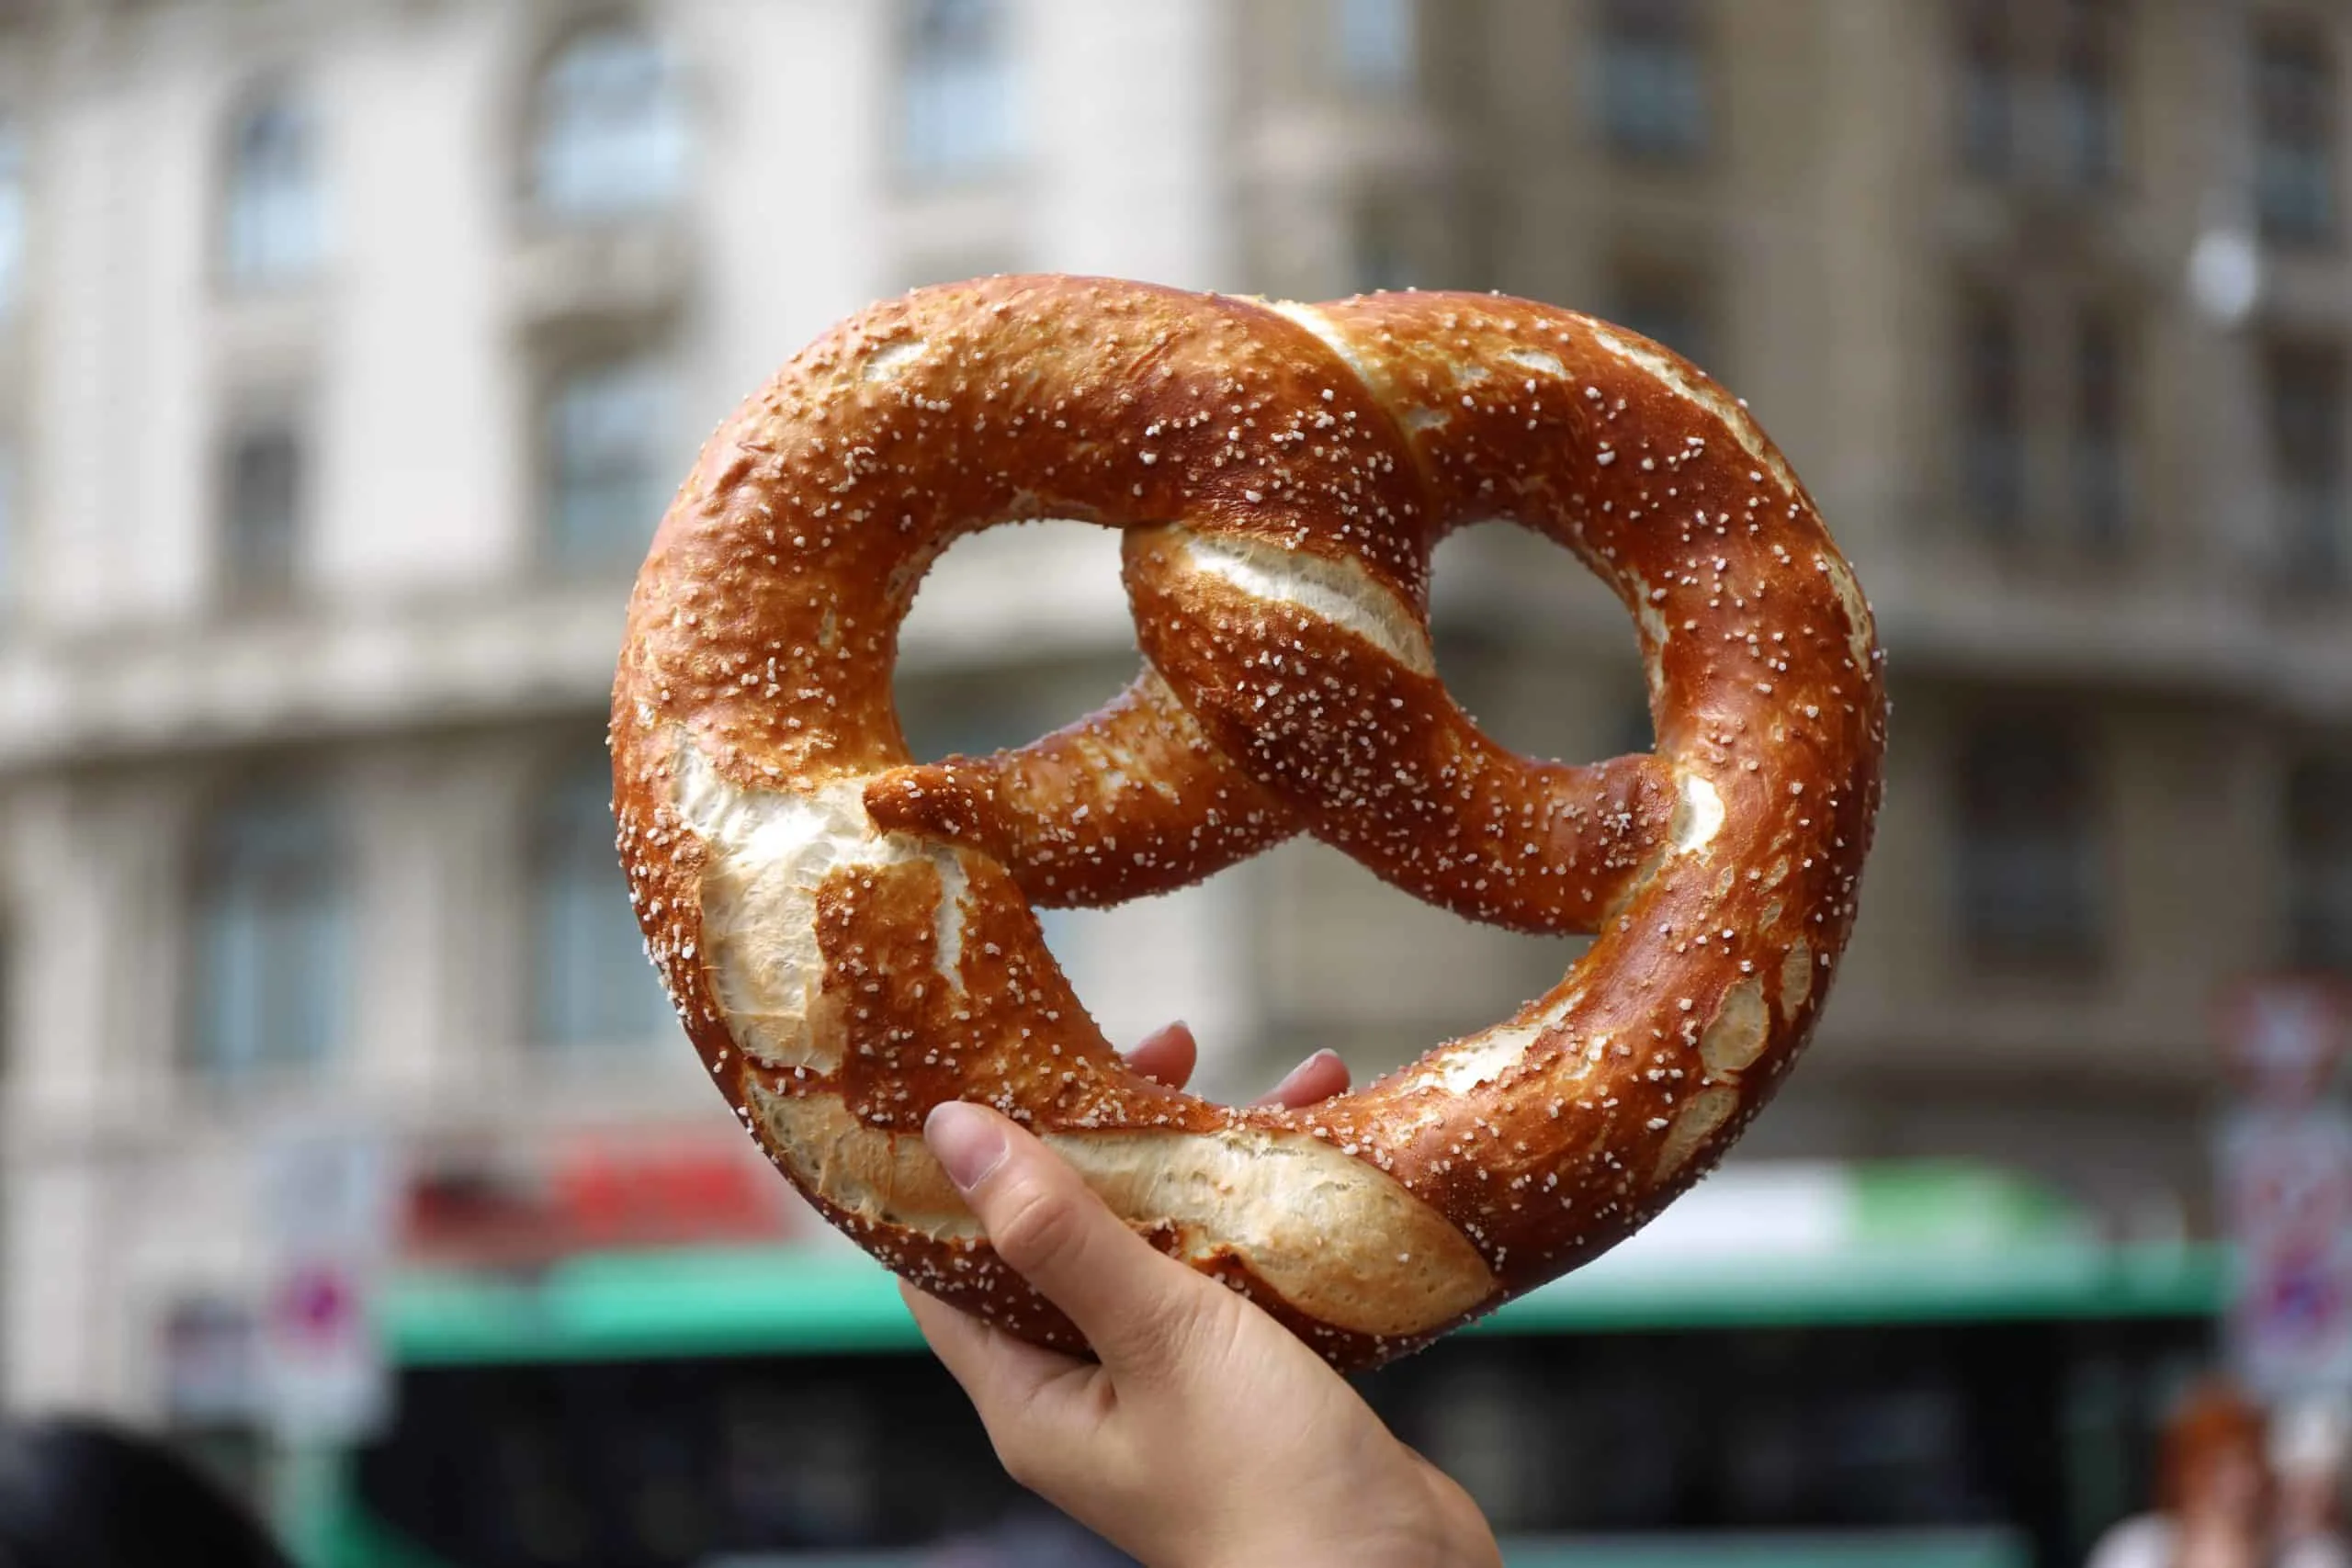 National Pretzel Day Deals - hand holding up a soft pretzel against an urban setting